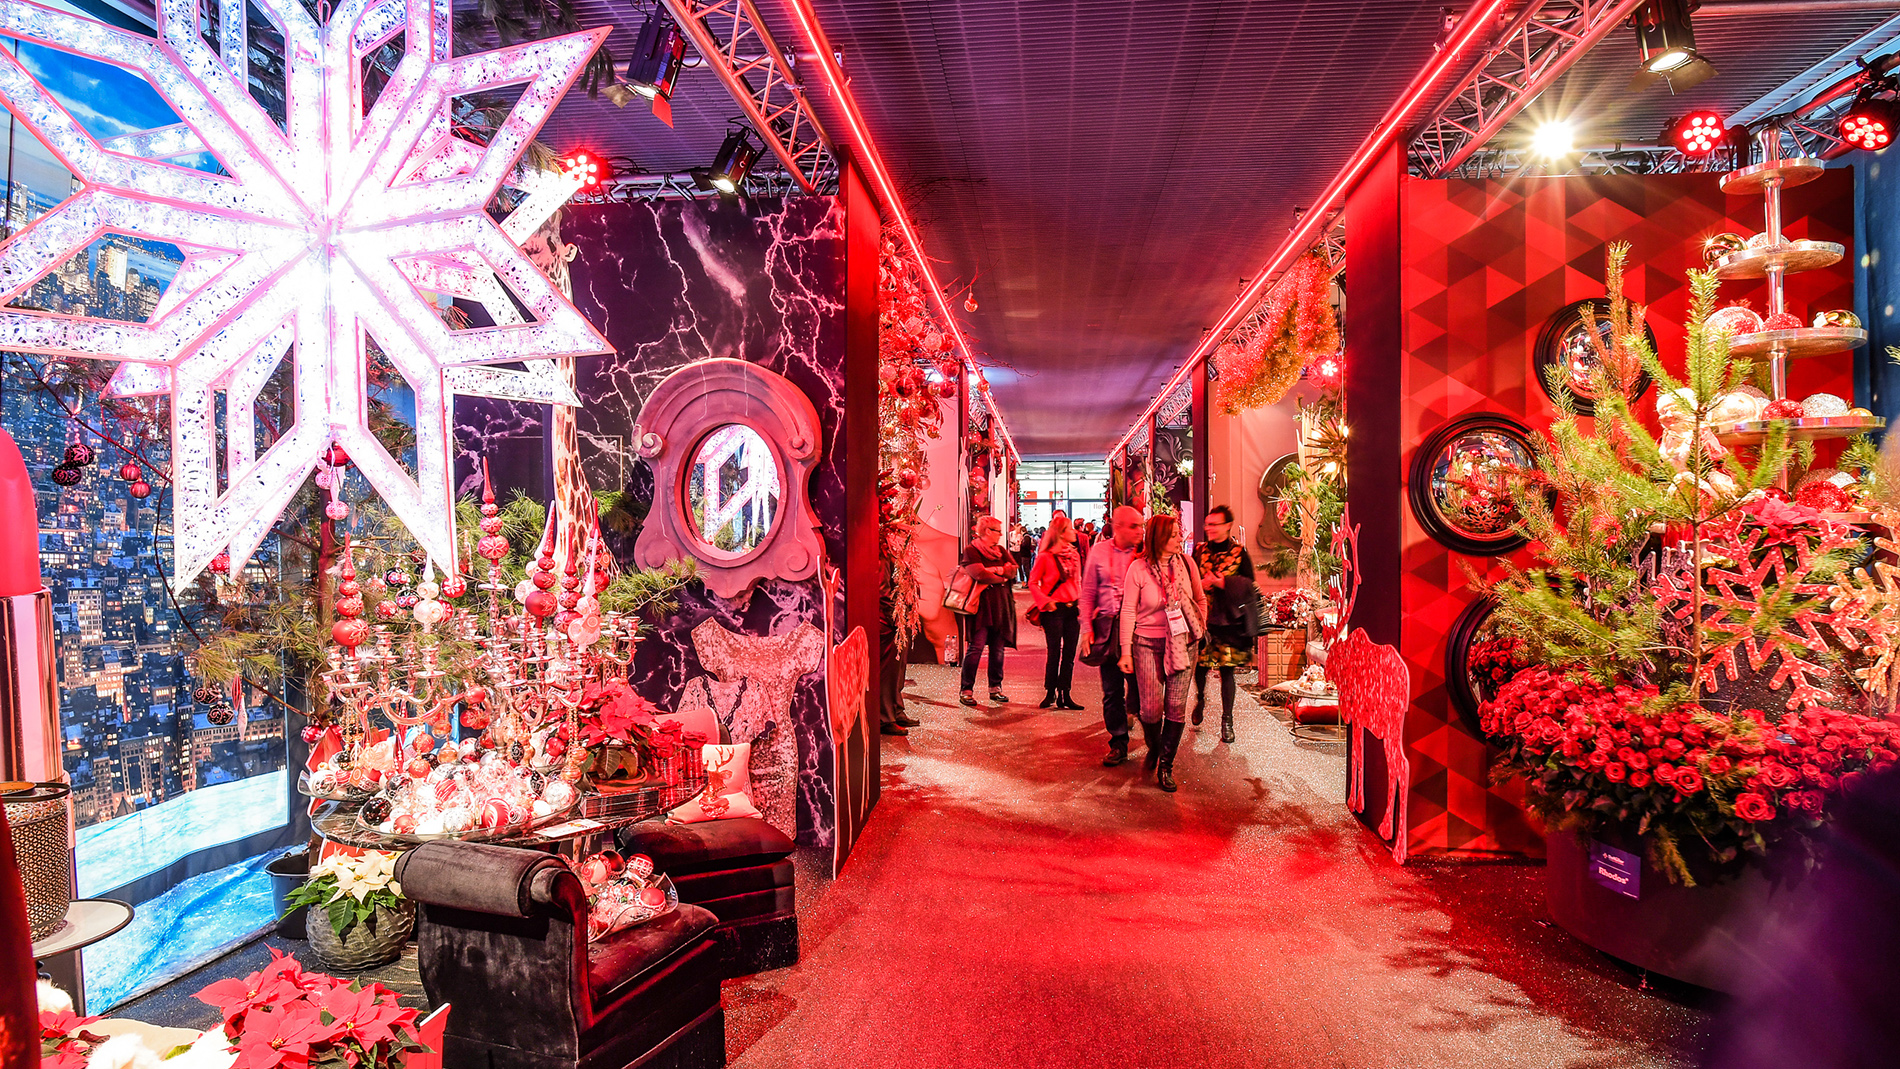 Christmasworld: International Trade Fair for Seasonal and Festive Decorations